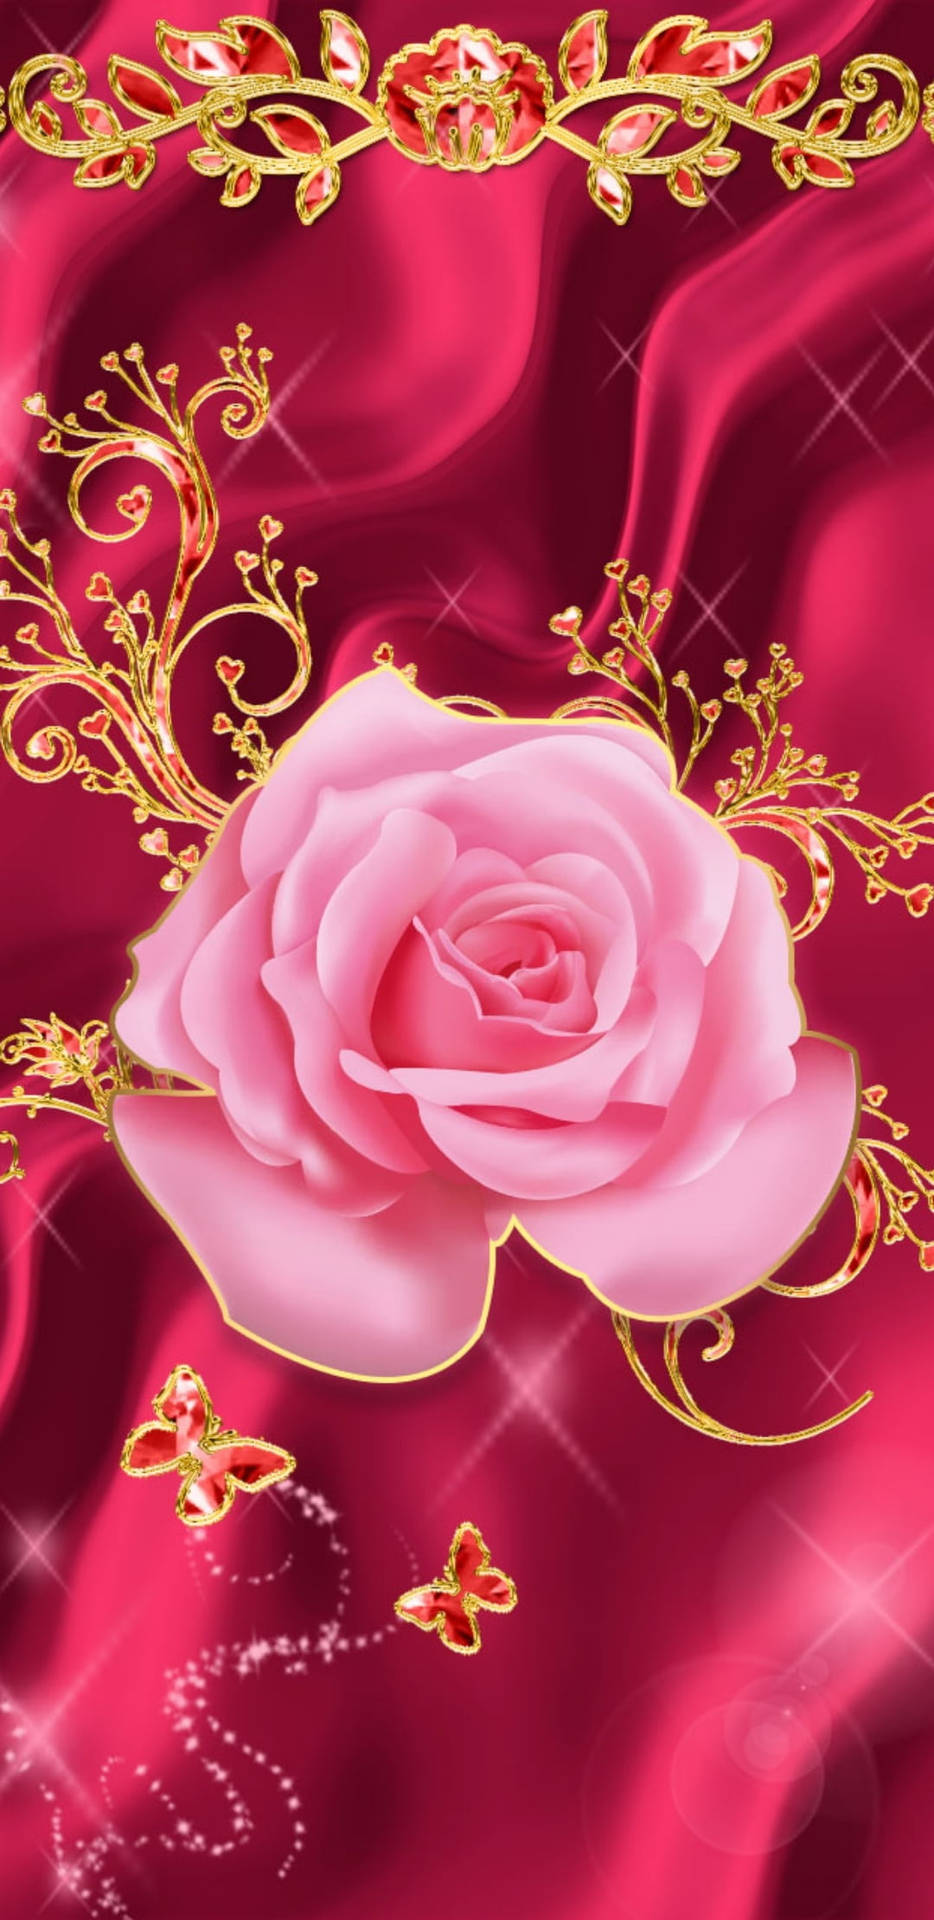 Femeninoy Brillante Rosa Fondo de pantalla